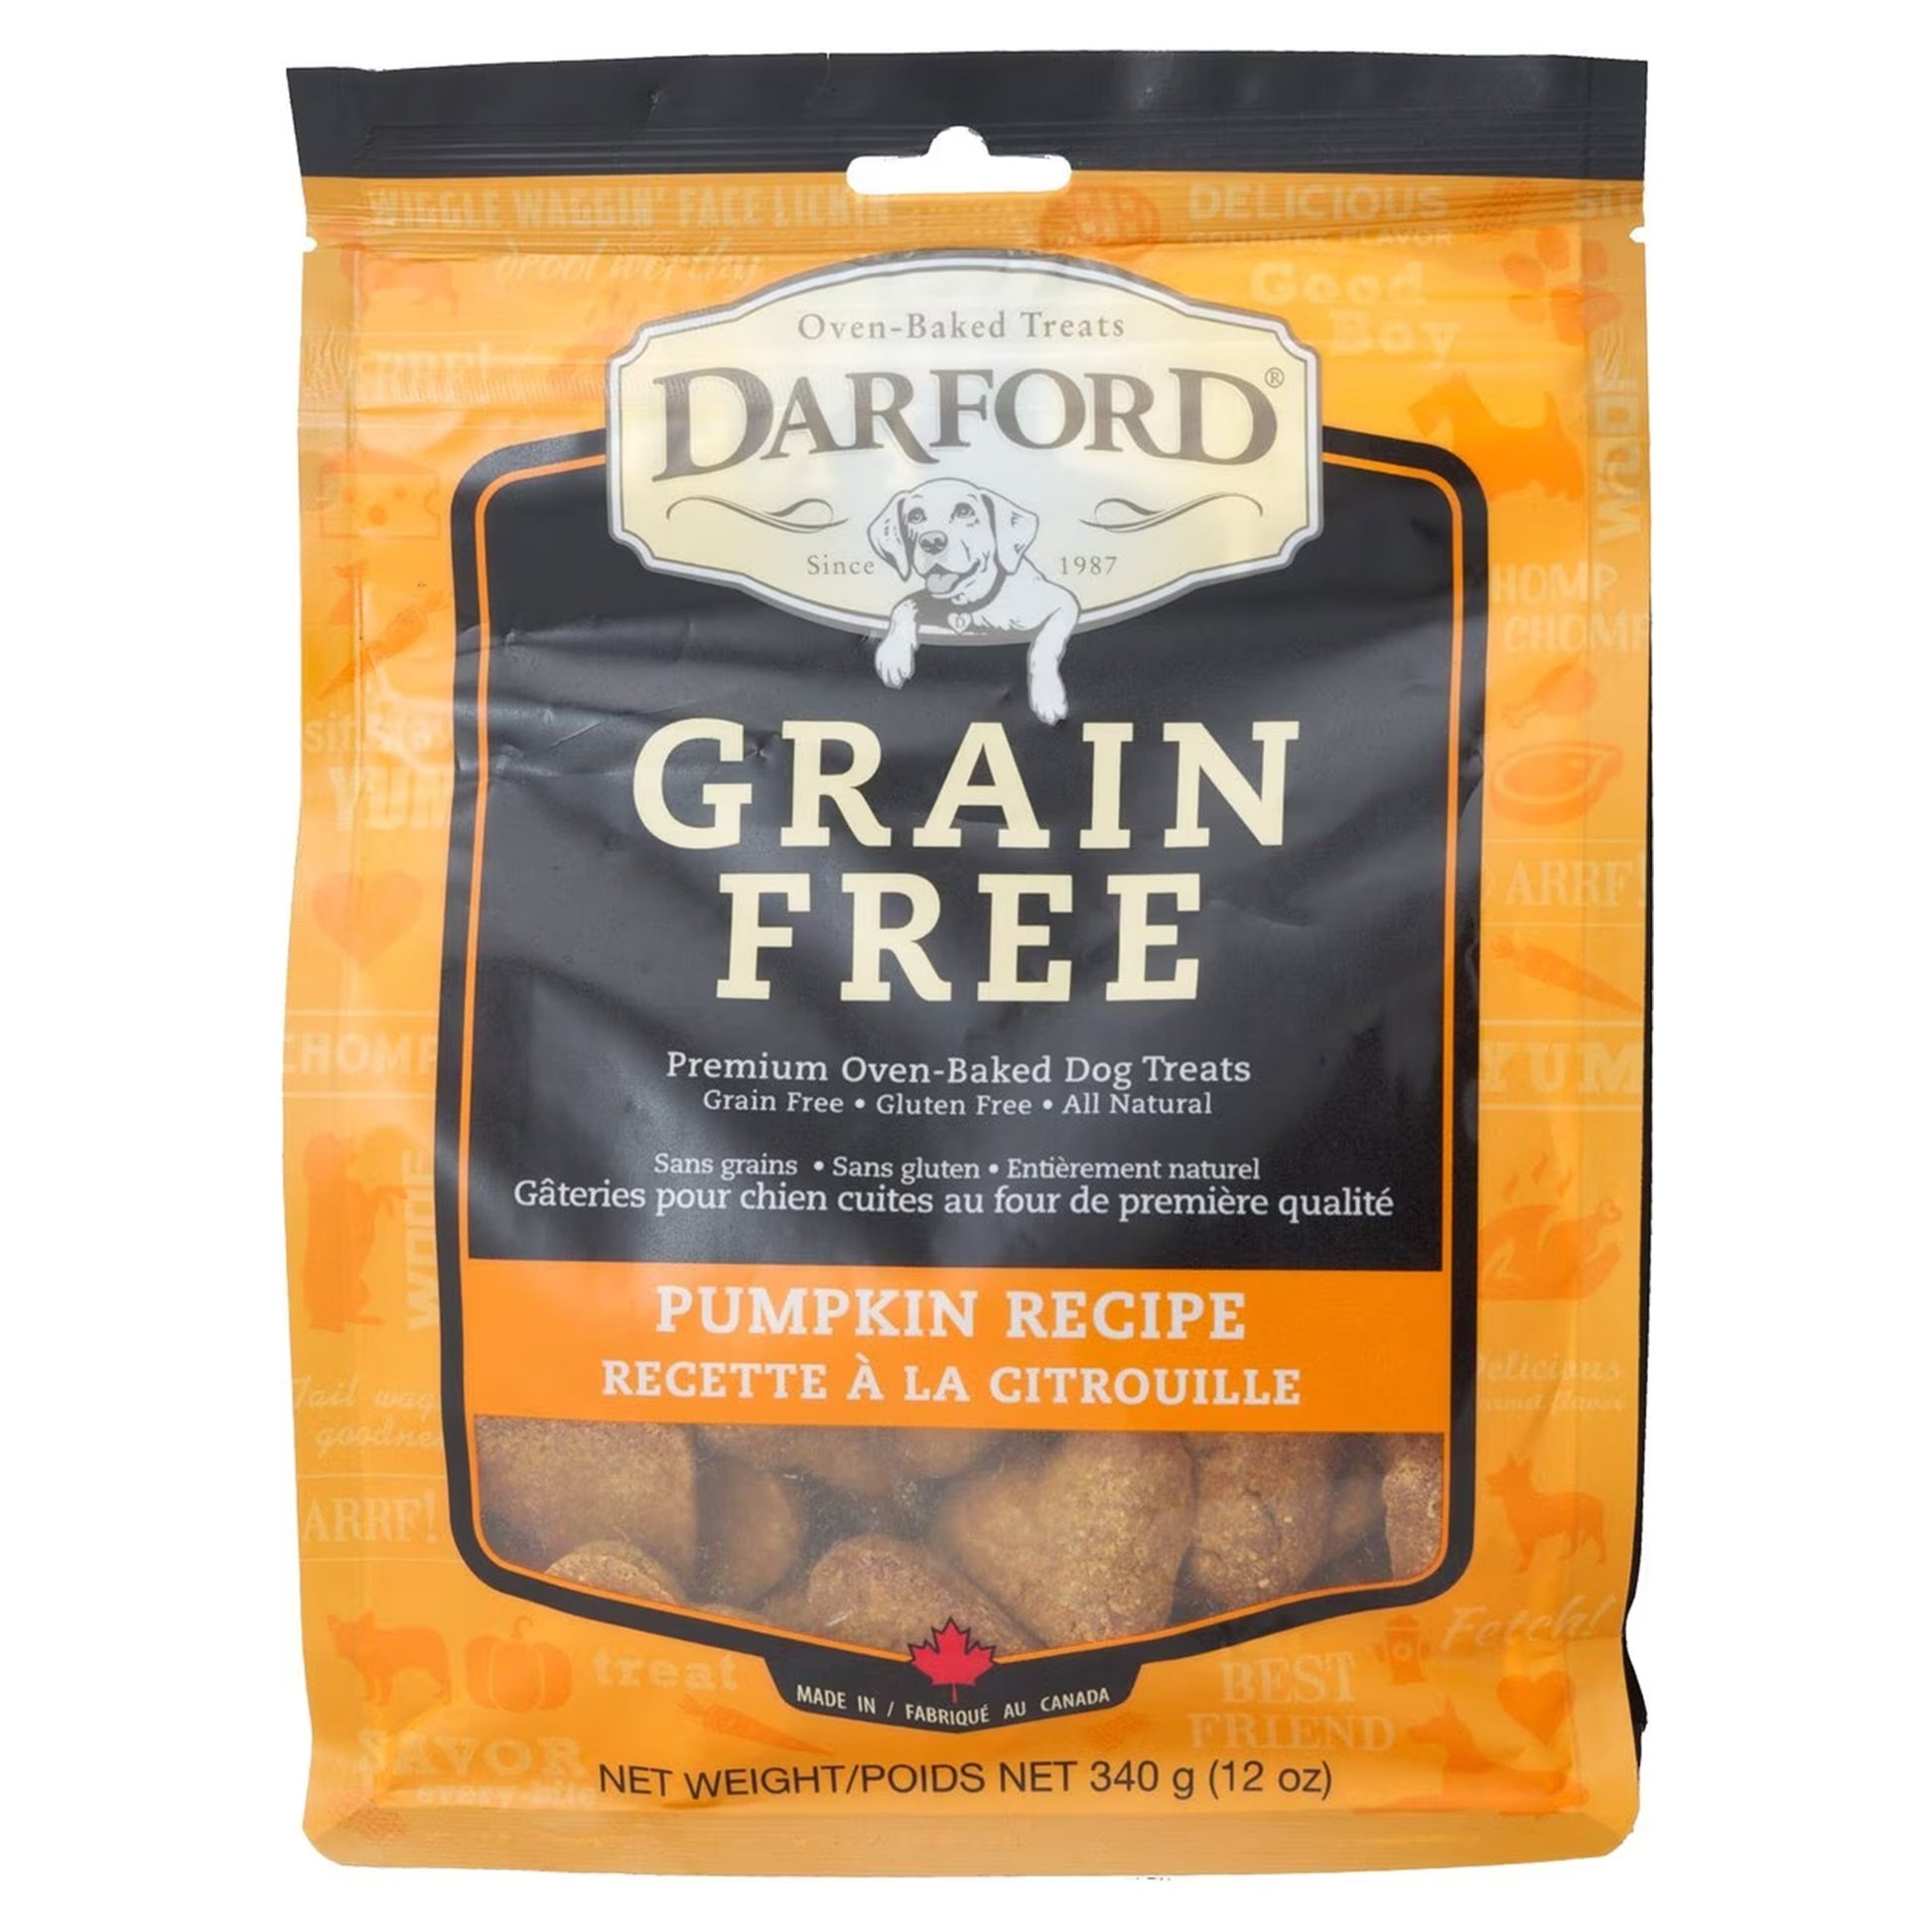 Darford Grain Free Pumpkin Recipe Biscuits Regular, Pumpkin, 12 oz, Darford